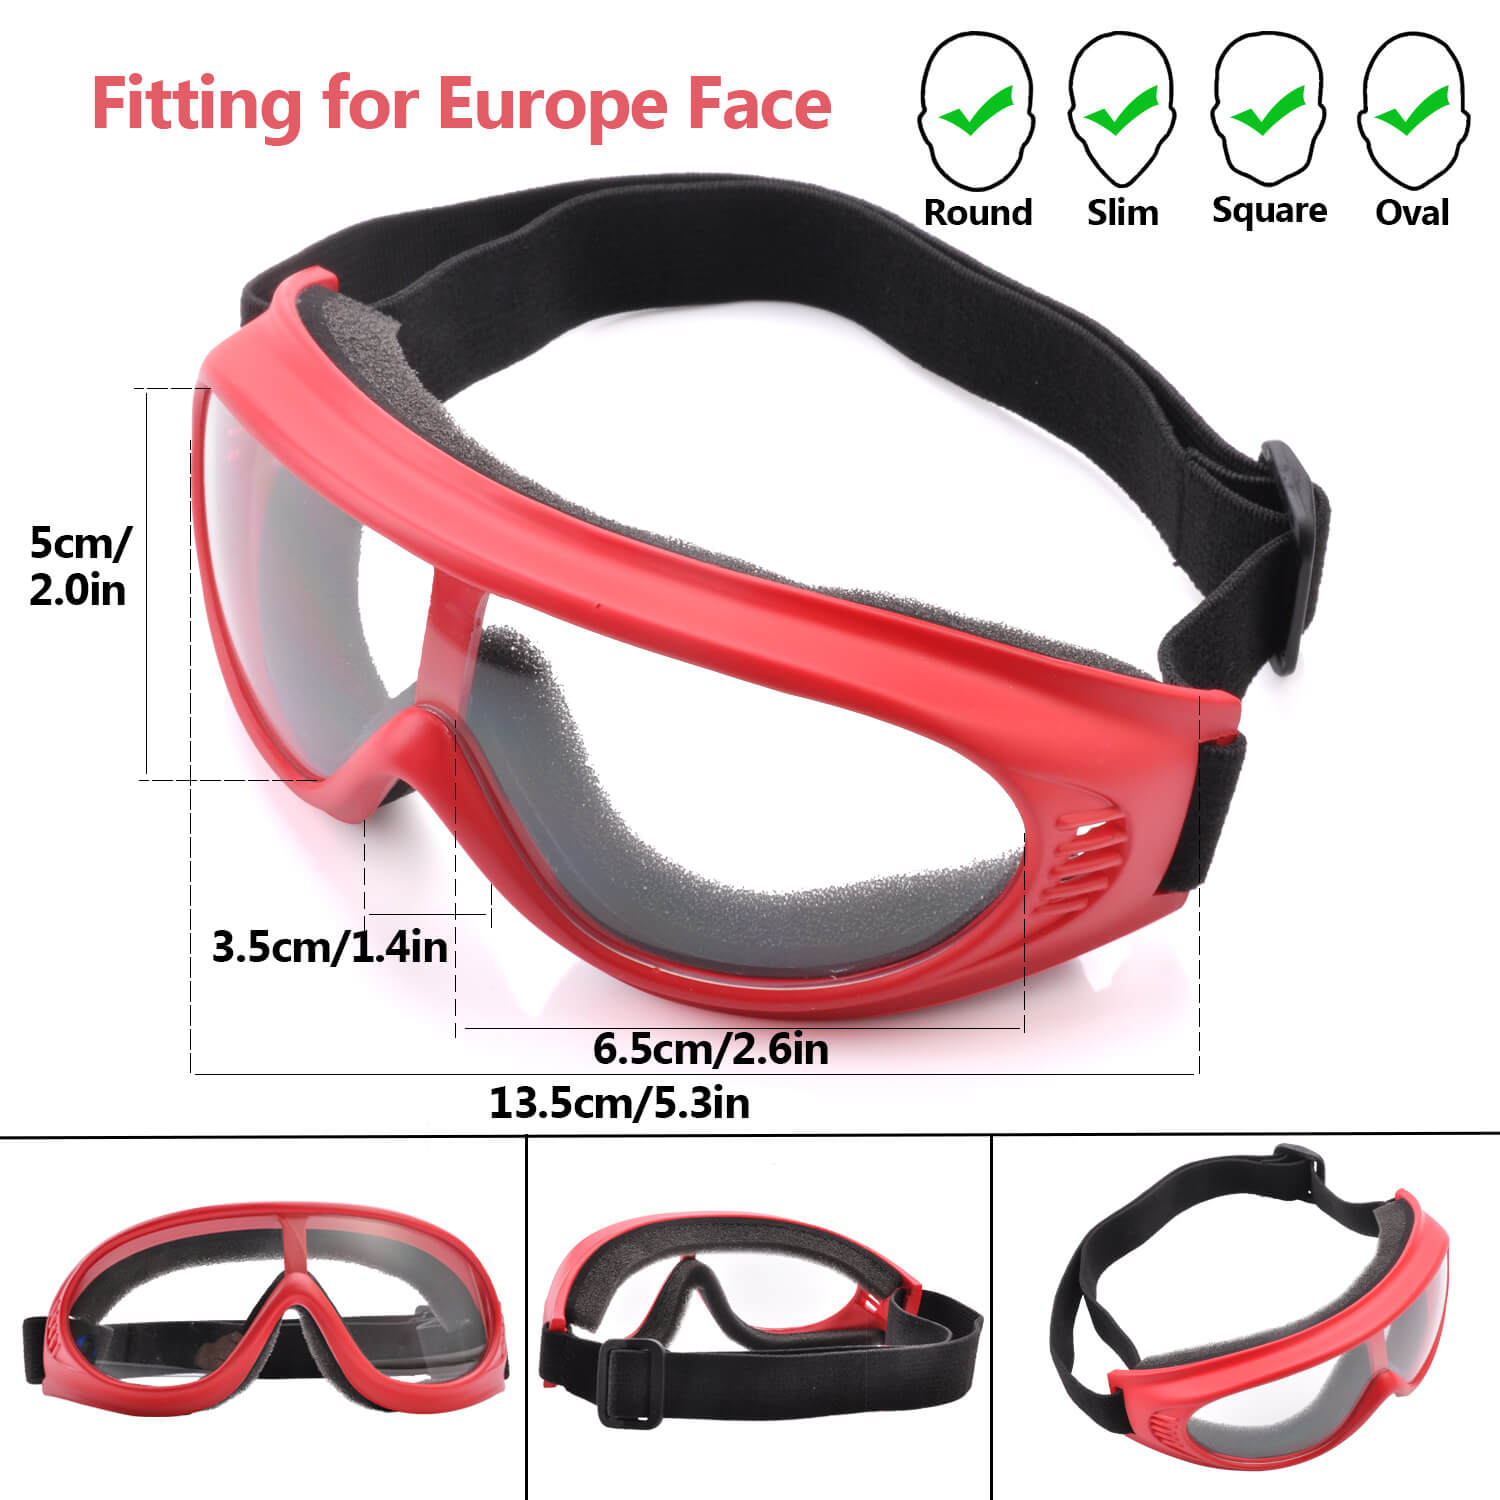 Safeyear Fogless Kids Safety Glasses UV Protection Safety Over Glasses Lens